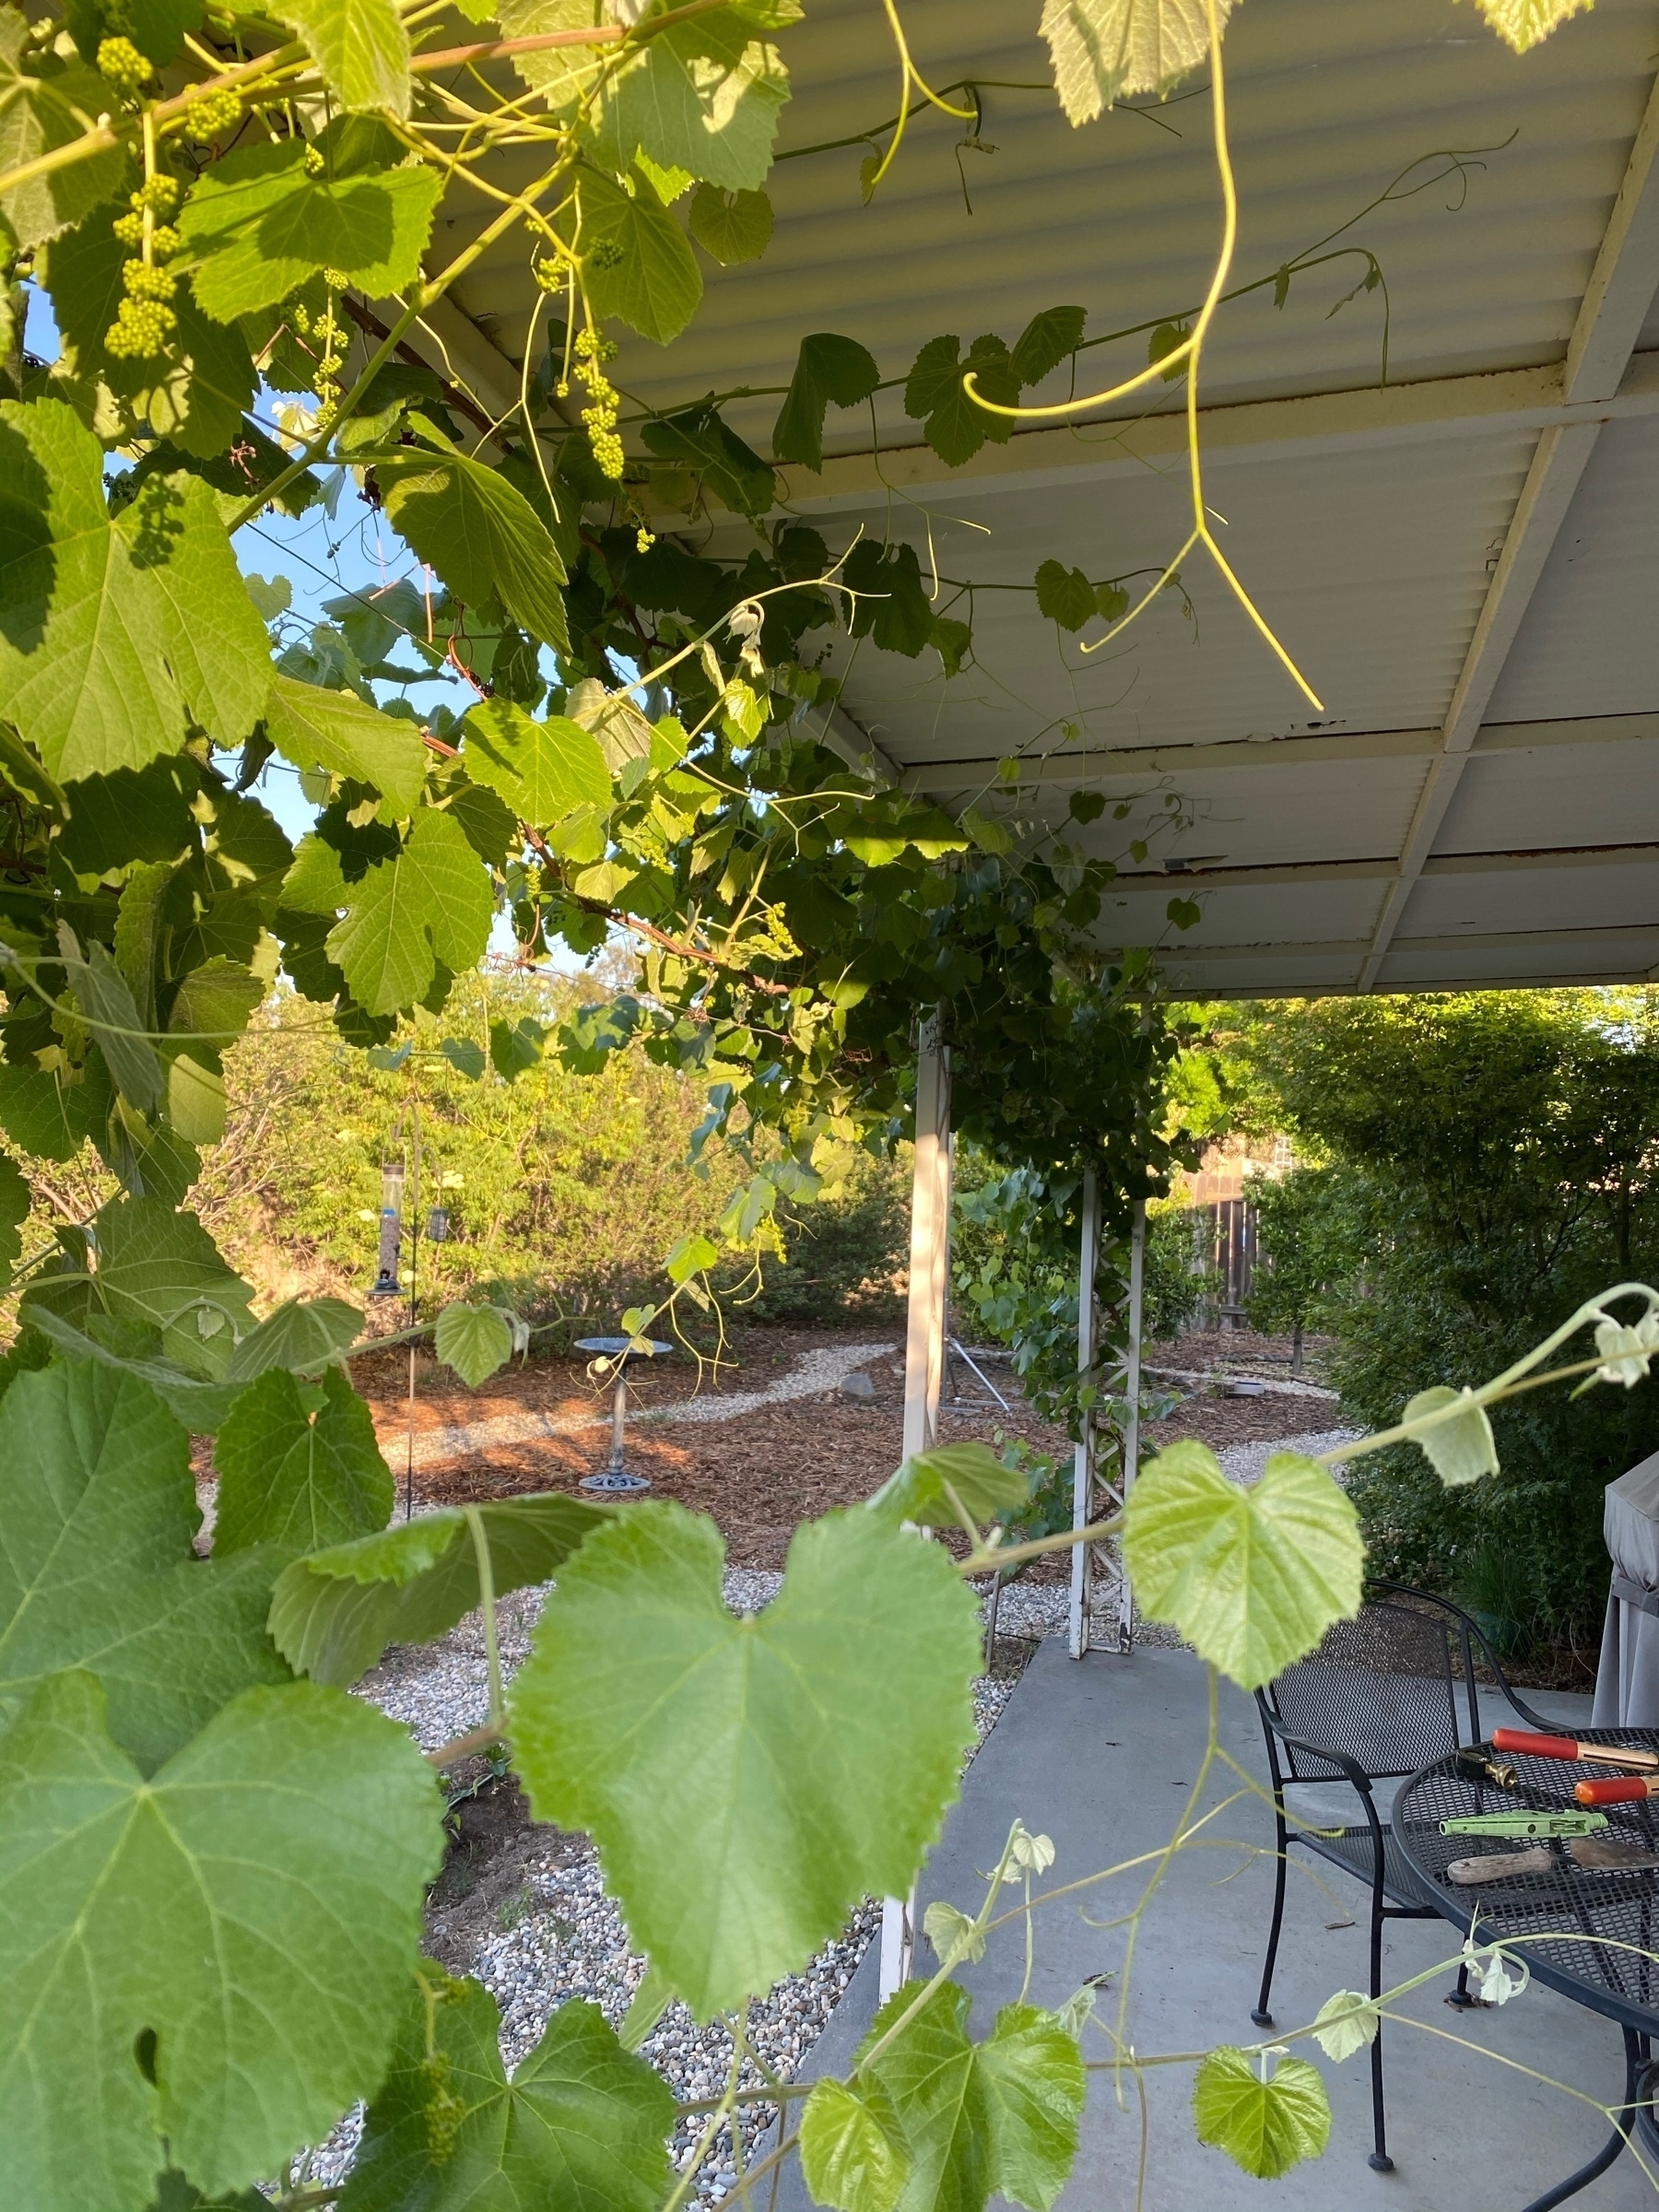 grapes vining below a porch cover